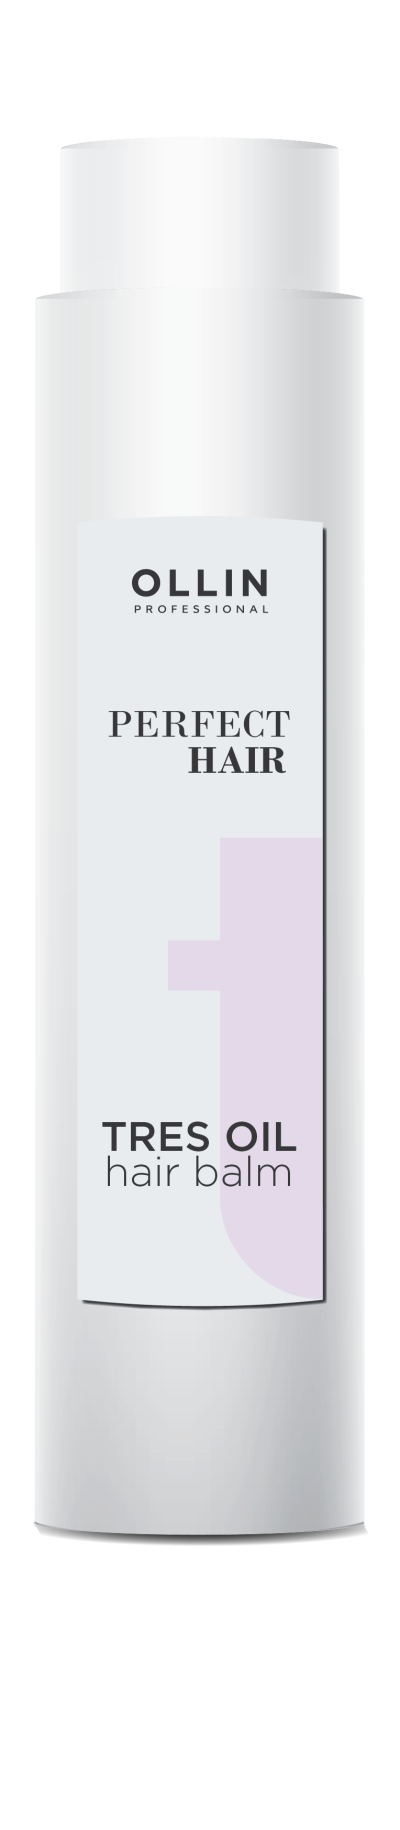 Ollin perfect hair tres oil бальзам для волос 400мл